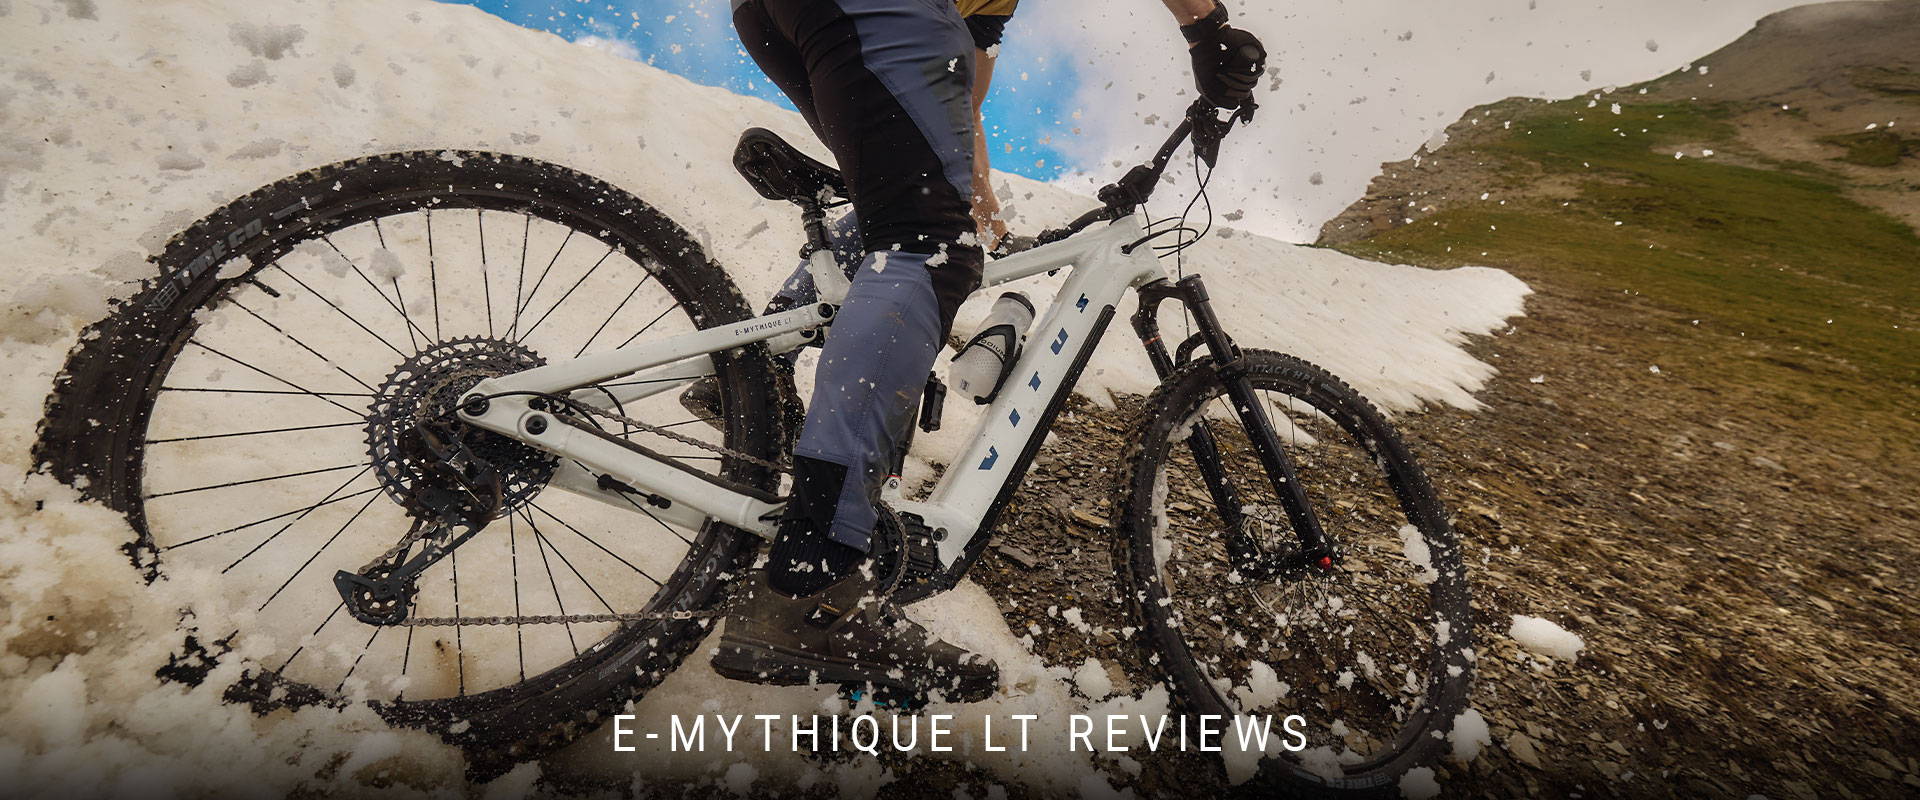 Vitus E-Mythique EMTB riding in the snow